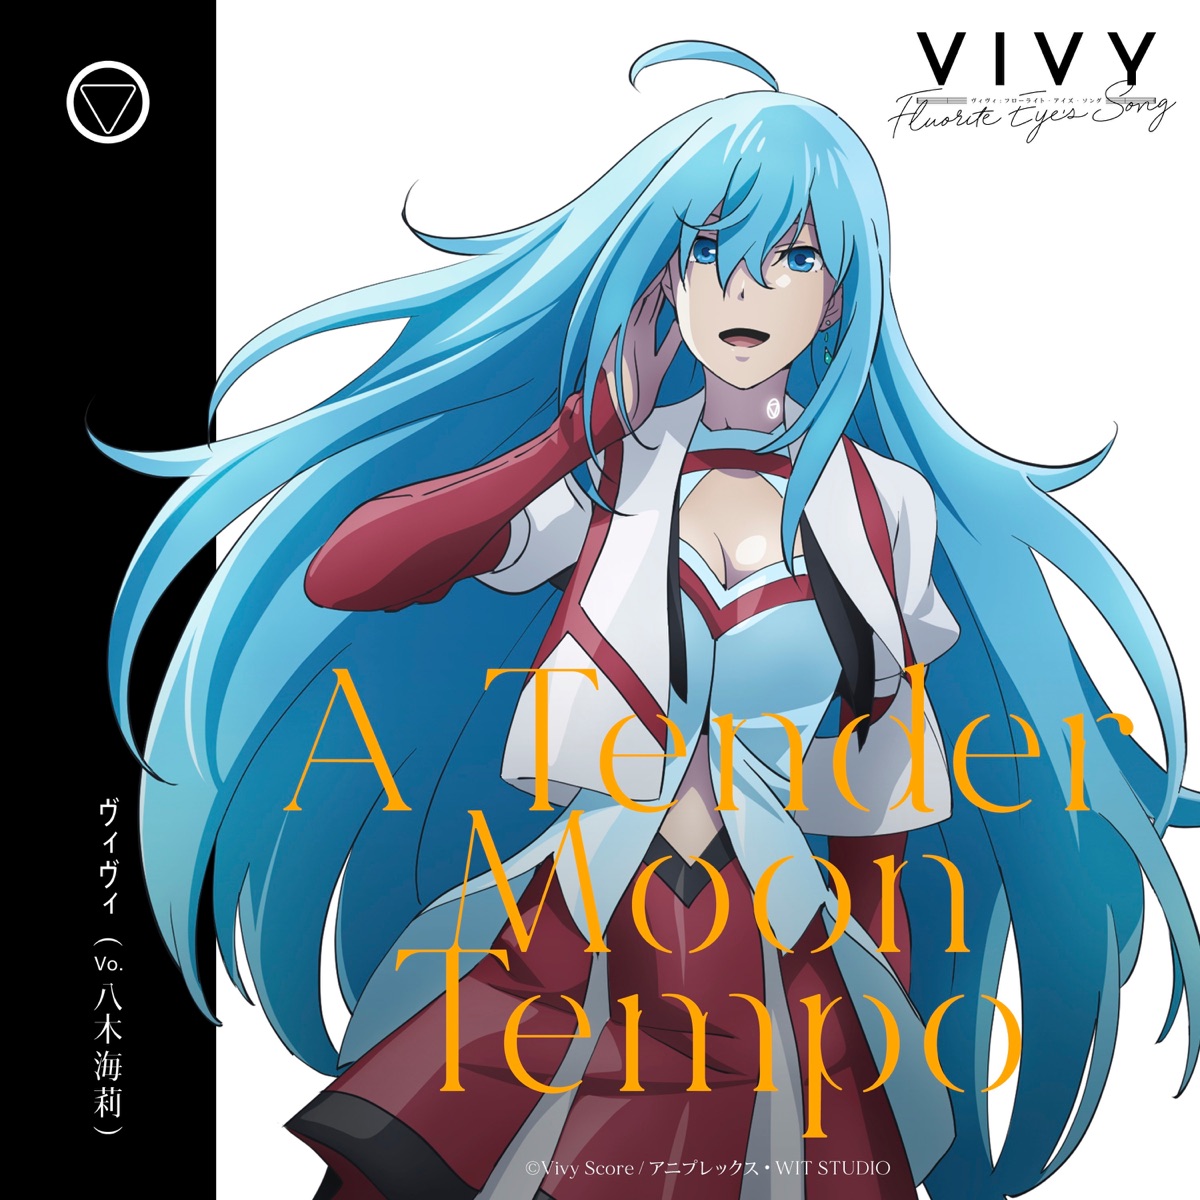 Cover art for『Vivy (Kairi Yagi) - A Tender Moon Tempo』from the release『A Tender Moon Tempo